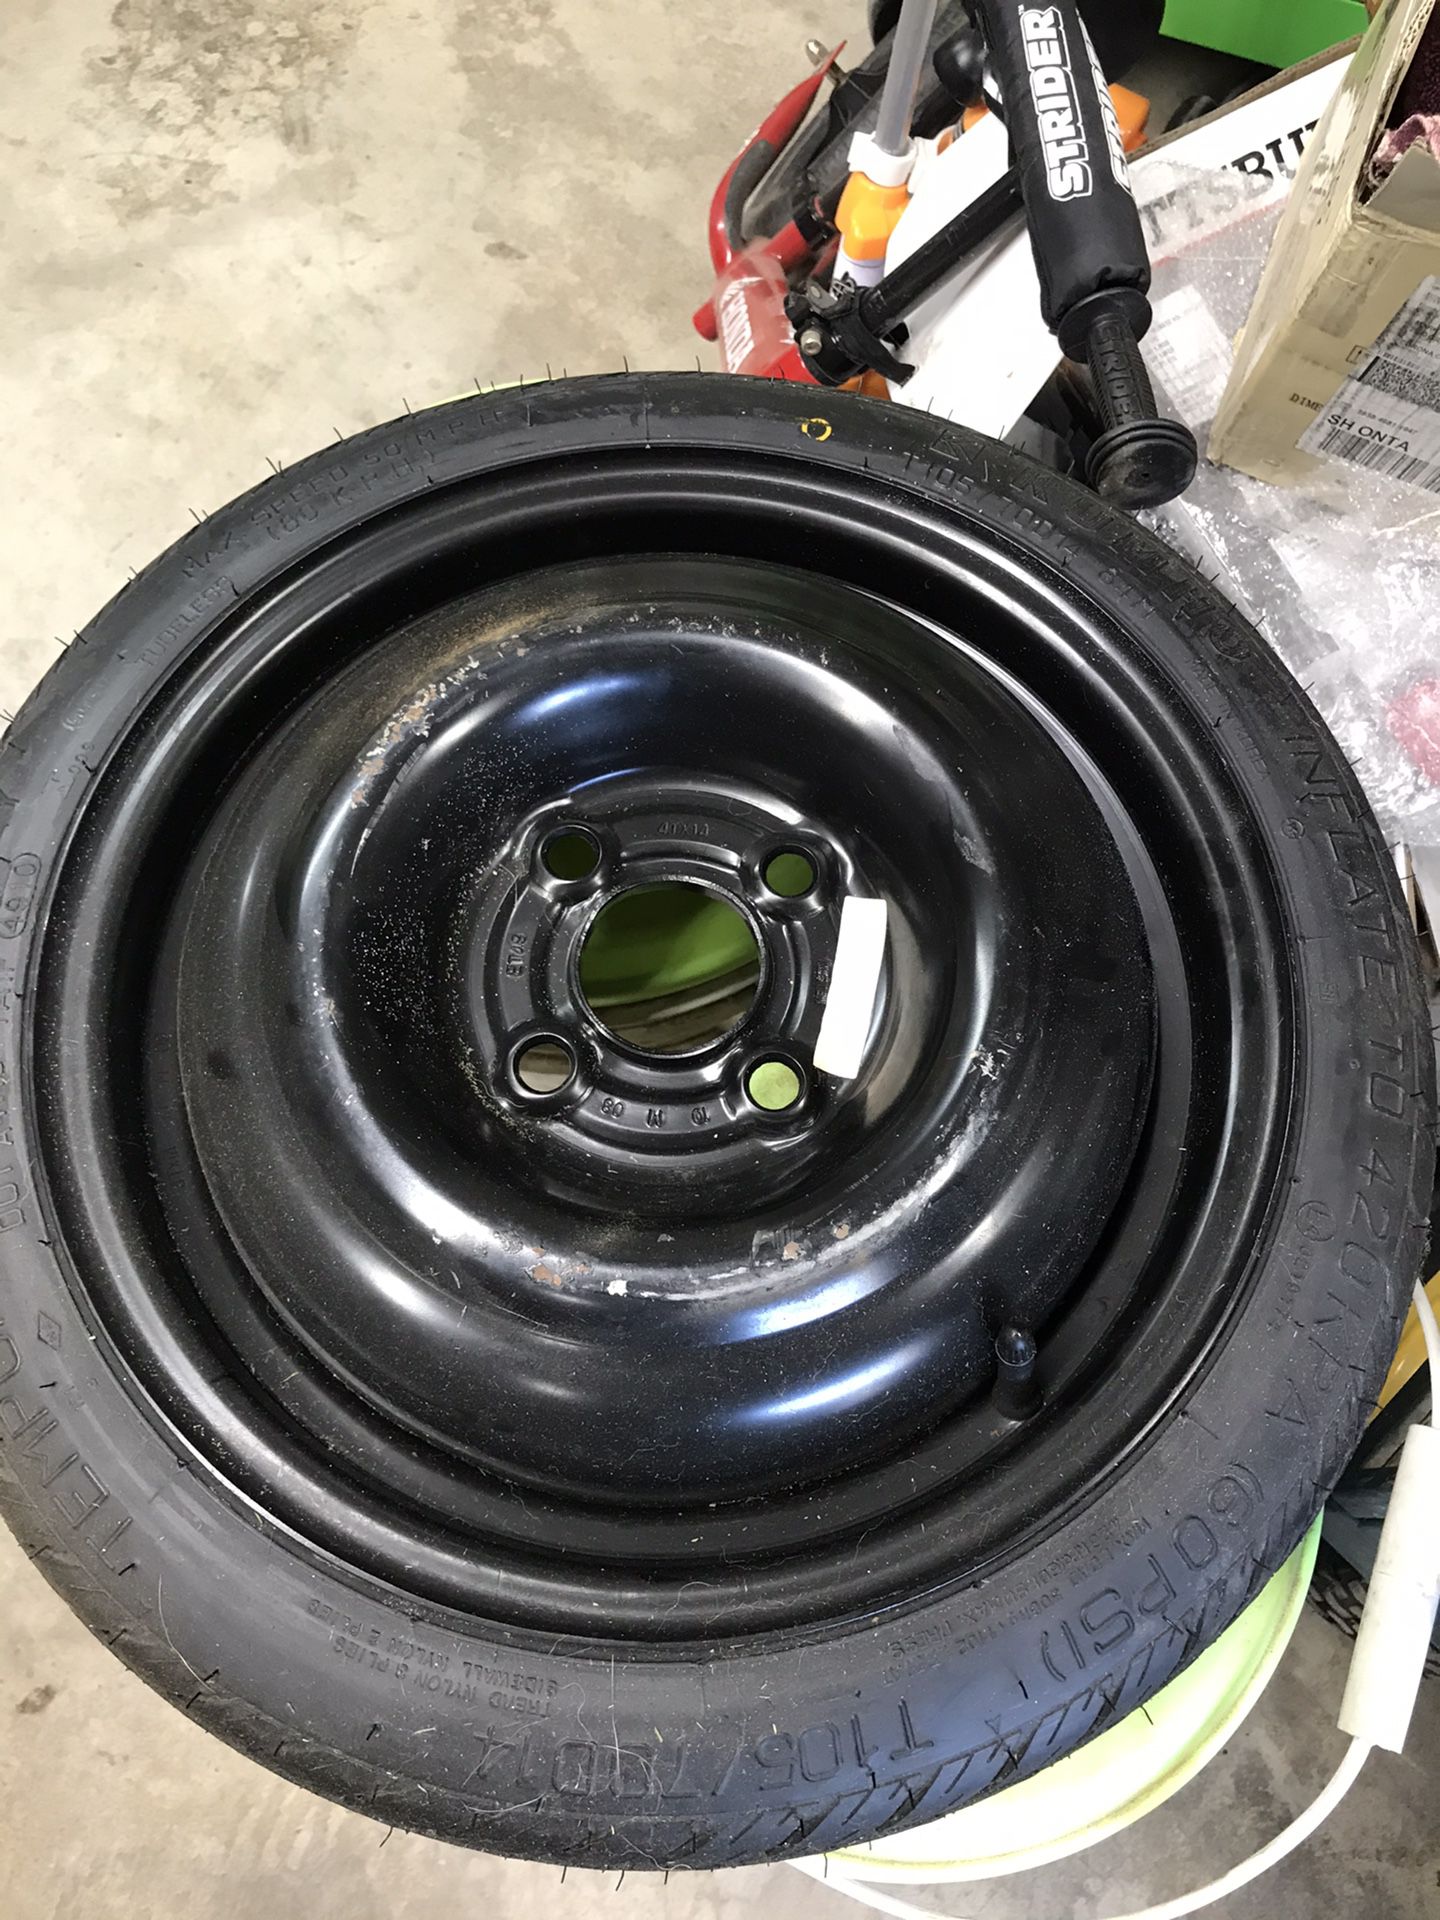 2015 Chevy Spark brand new never installed spare tire